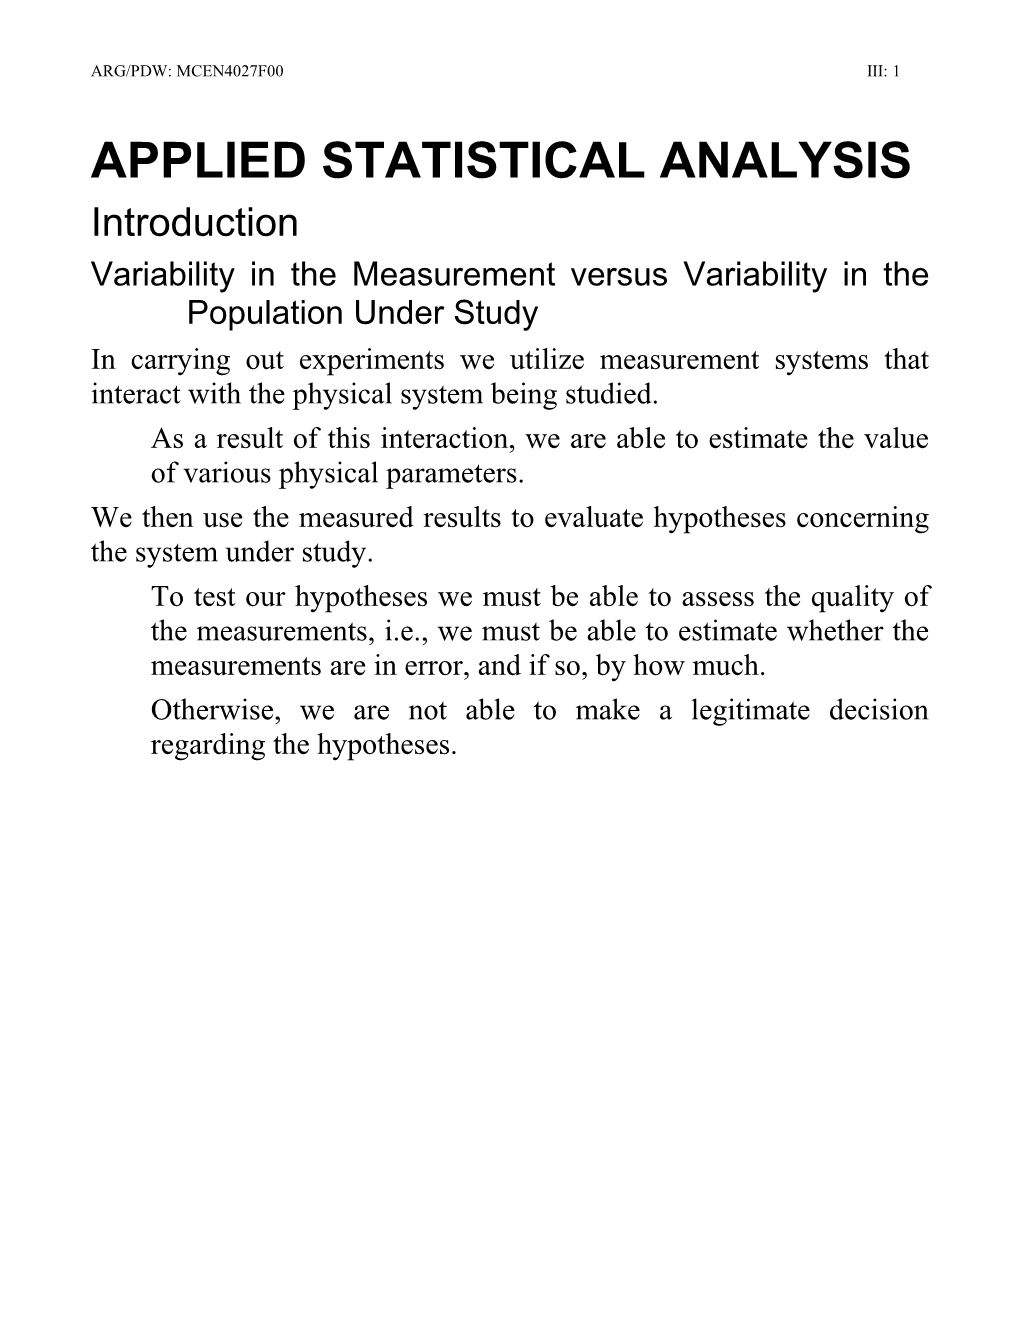 Statistical Analysis Notes